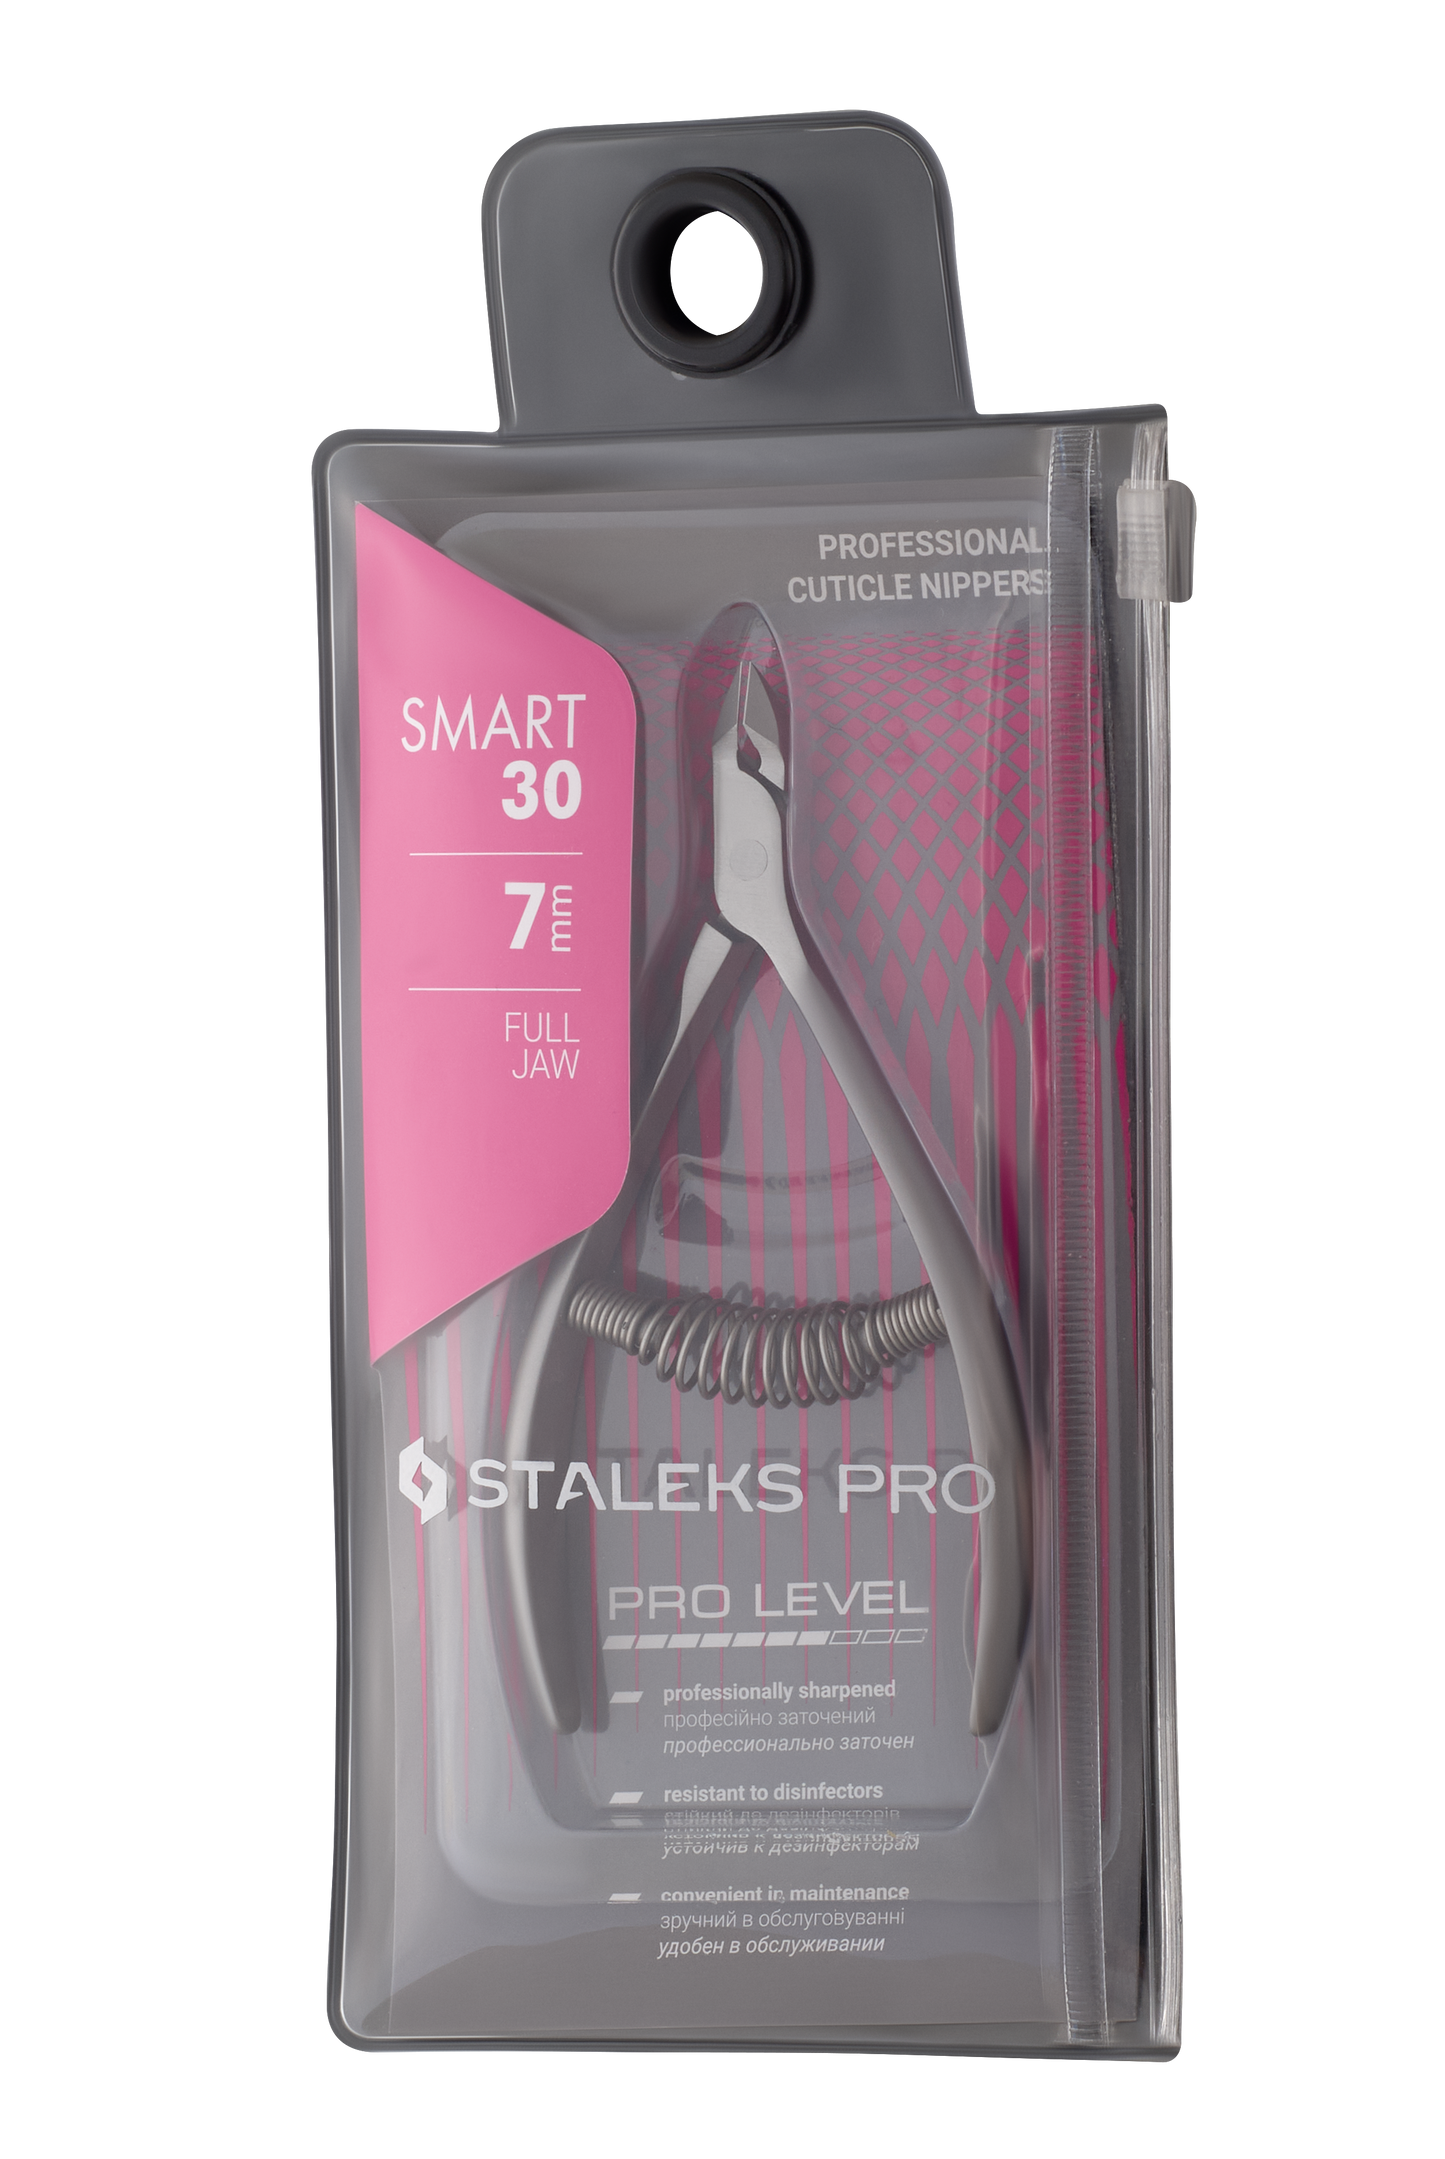 Professional Cuticle Nippers Smart 30 7mm.